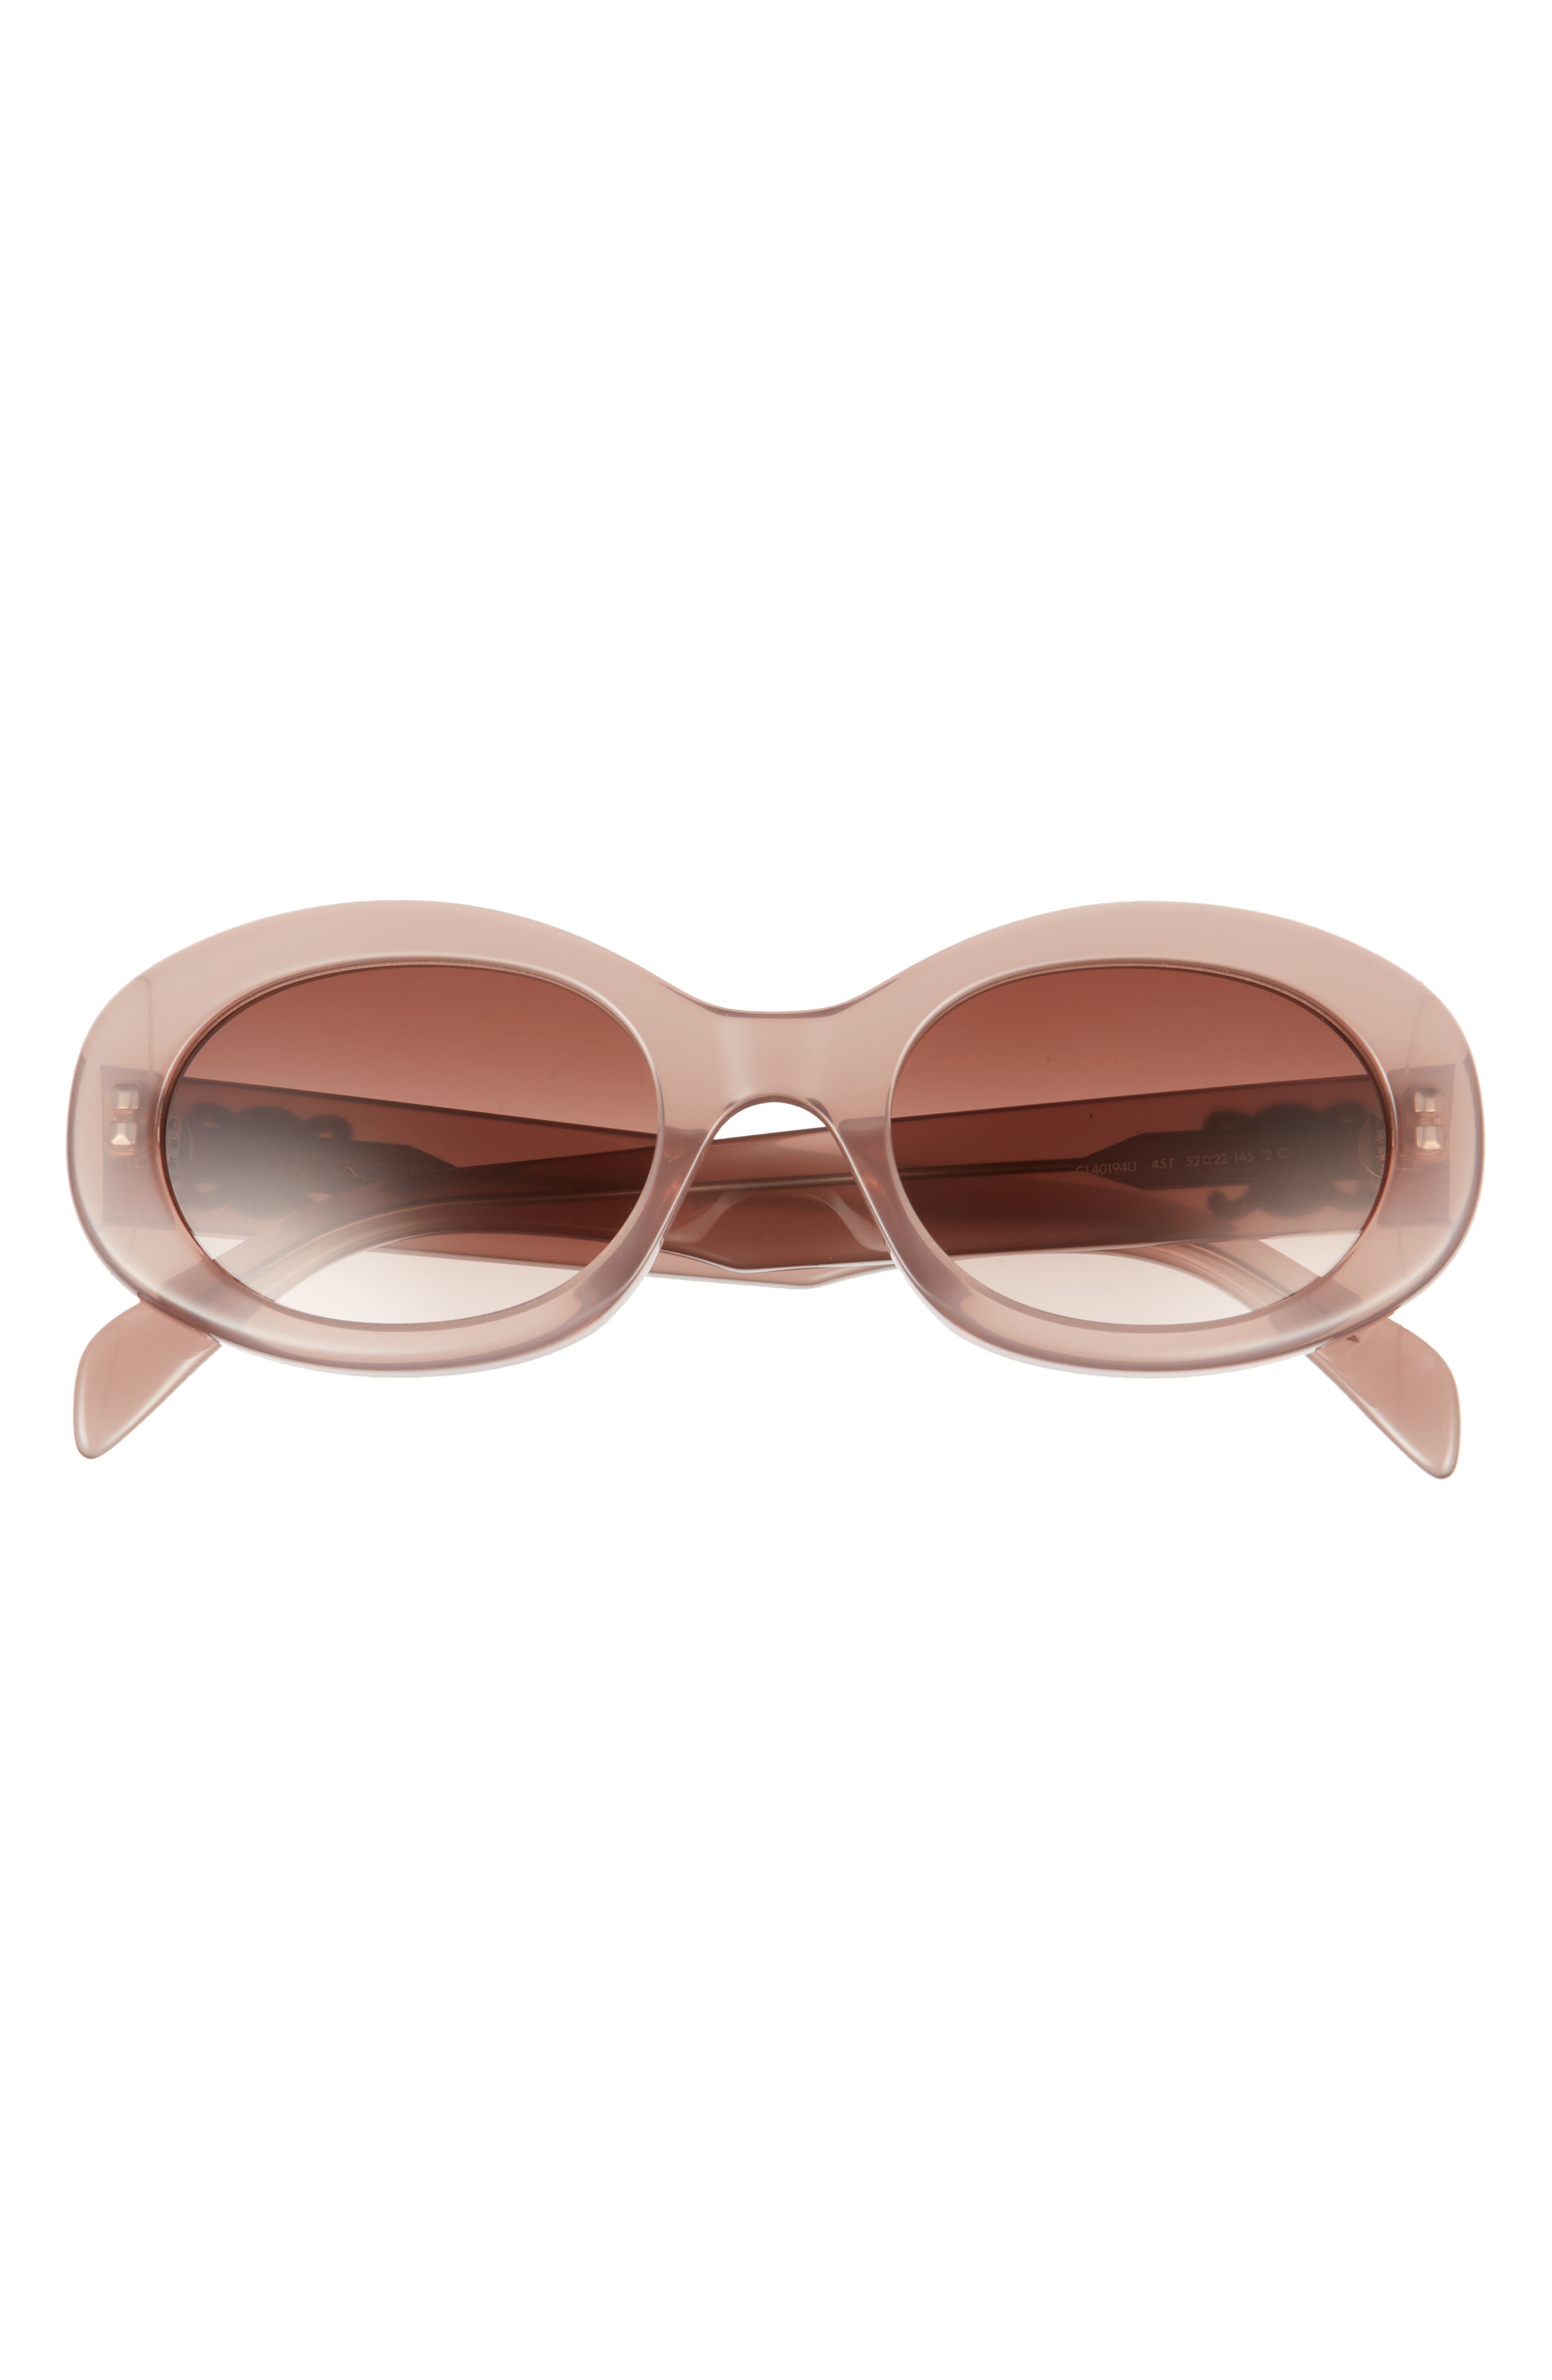 CELINE Triomphe 52mm Gradient Oval Sunglasses in Shiny Light